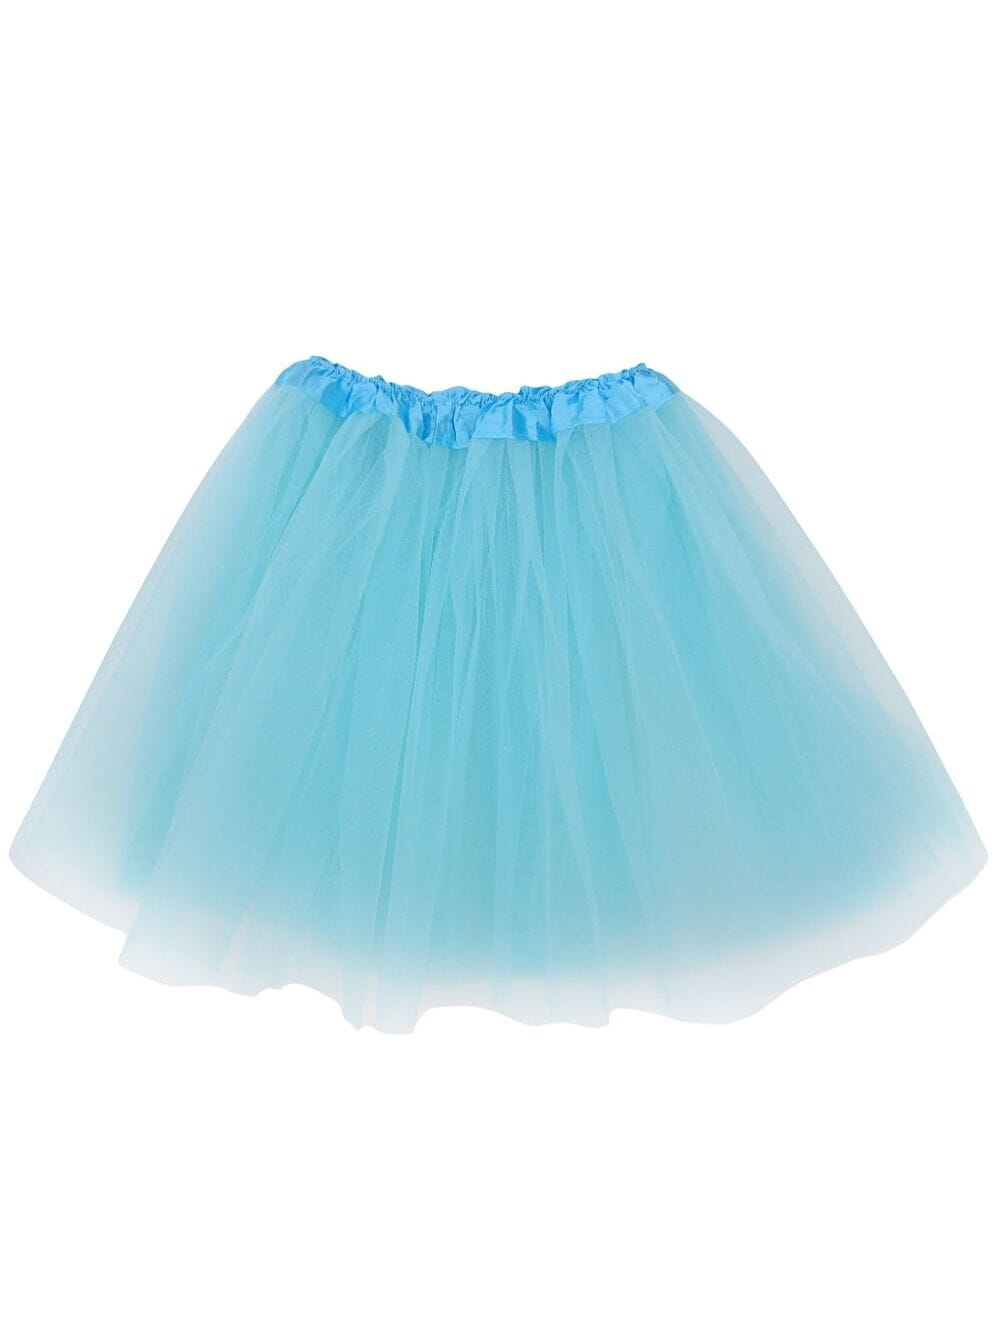 Aqua Blue Plus Size Adult Tutu Skirt - Women's Plus Size 3- Layer Basic Ballet Costume Dance Tutus - Sydney So Sweet